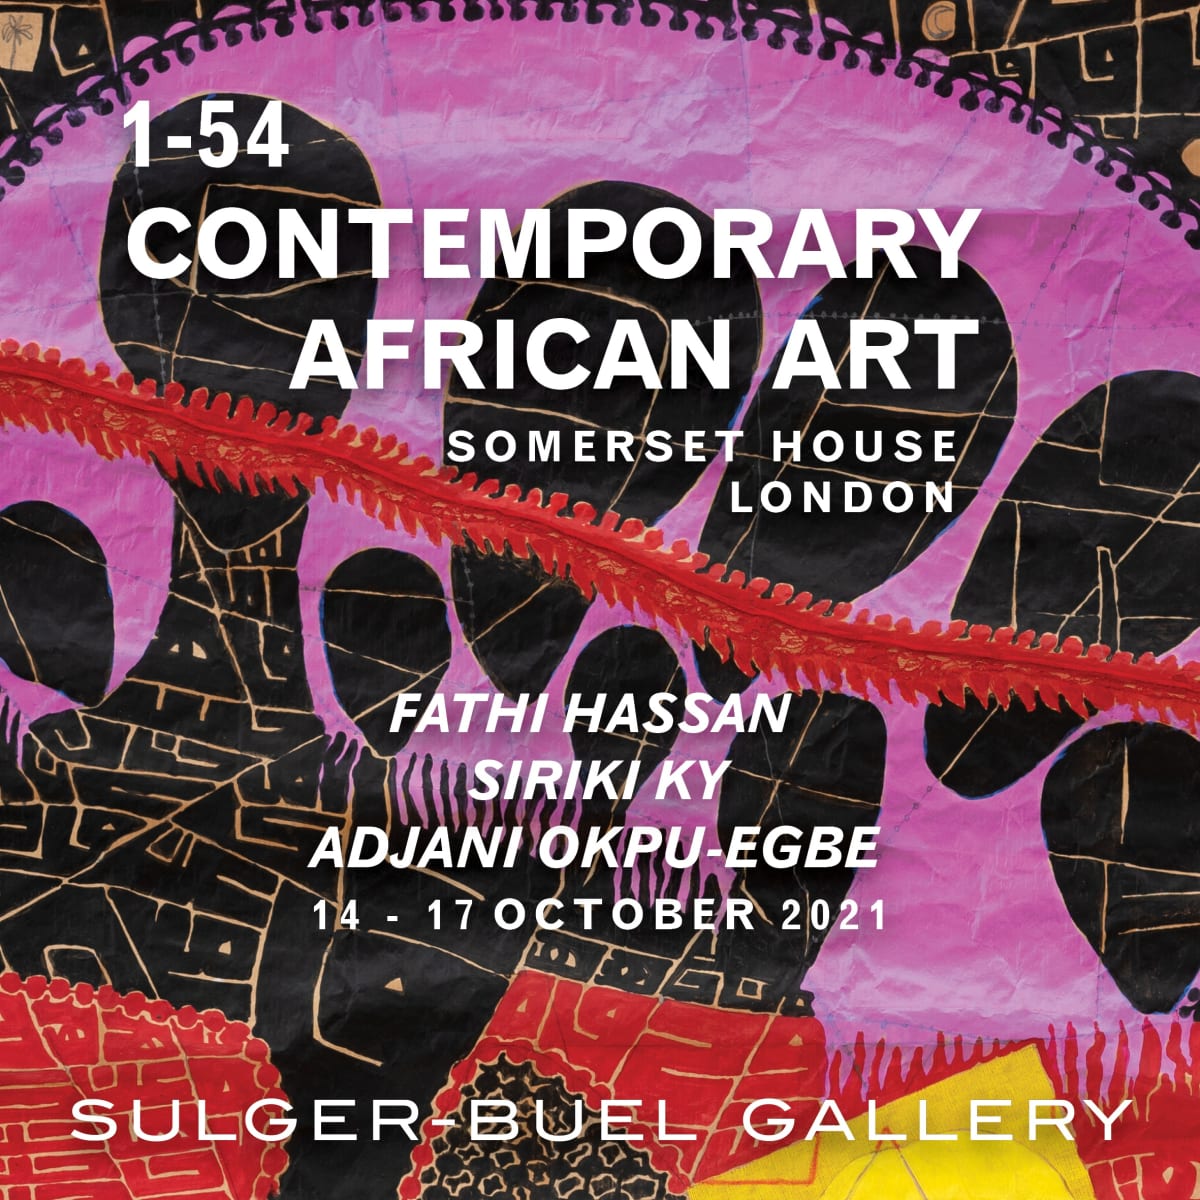 1-54 Contemporary African Art Fair 